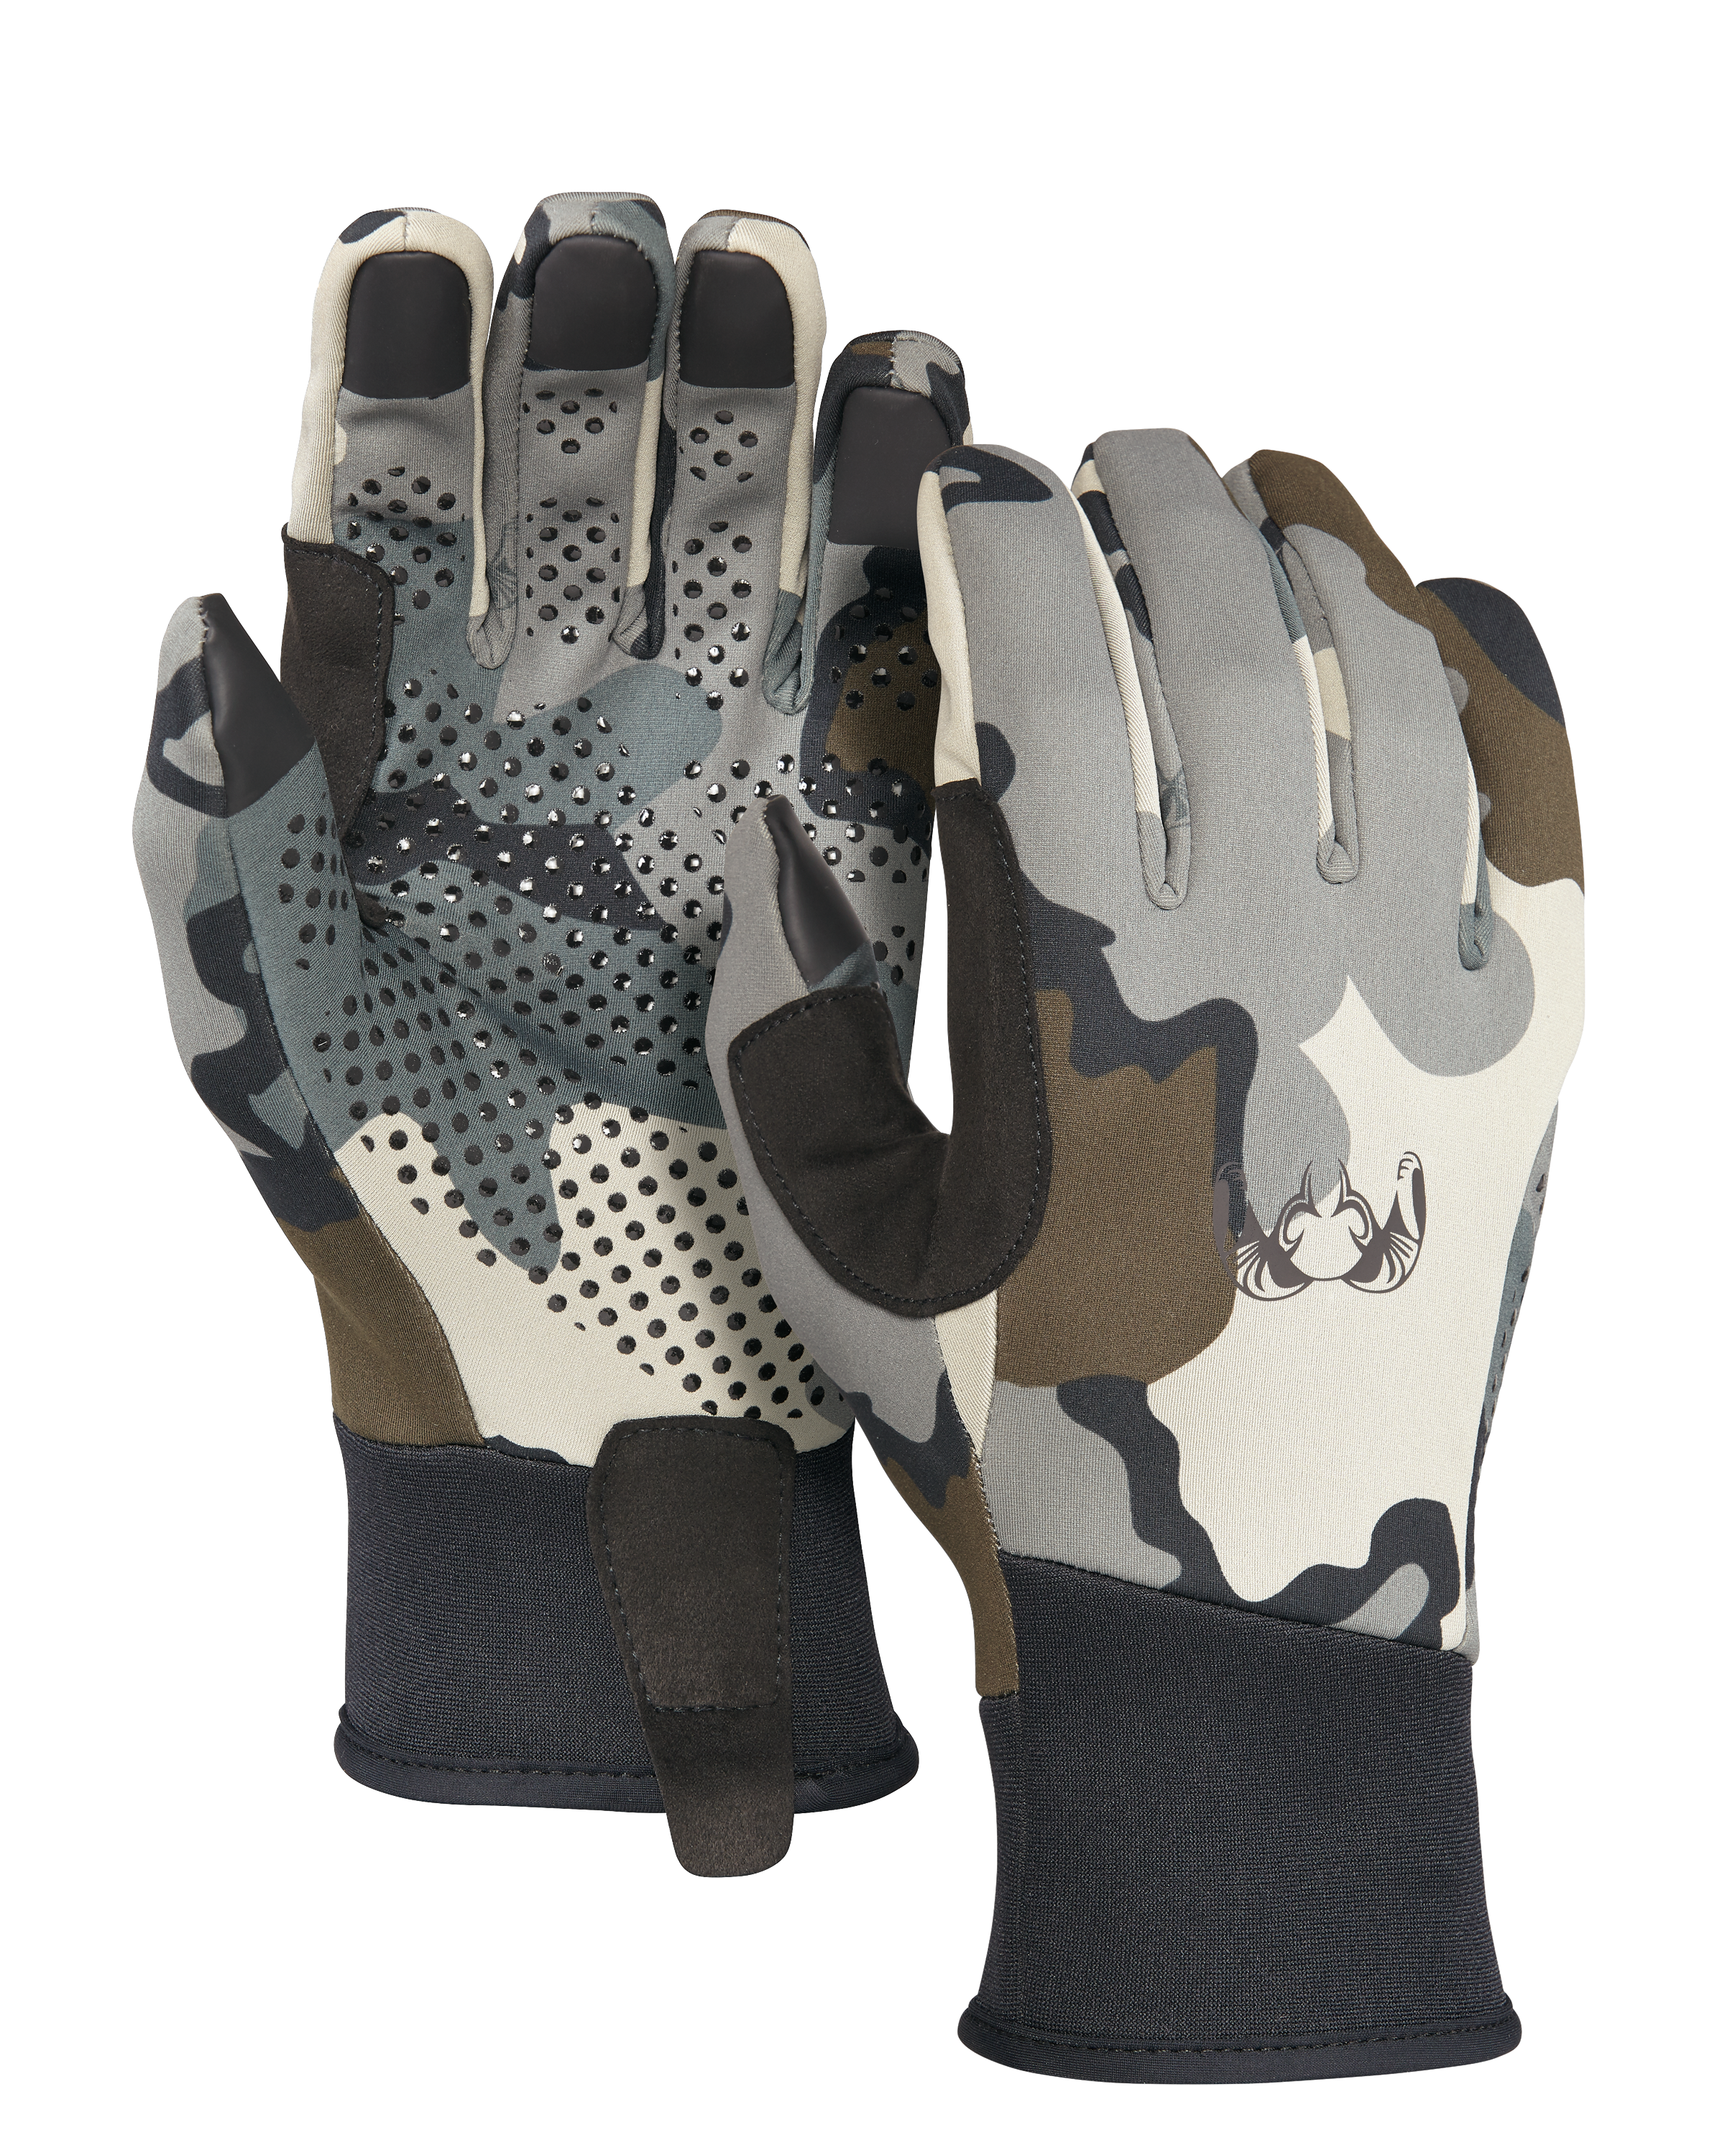 KUIU Axis Hunting Glove in Vias | Size Medium